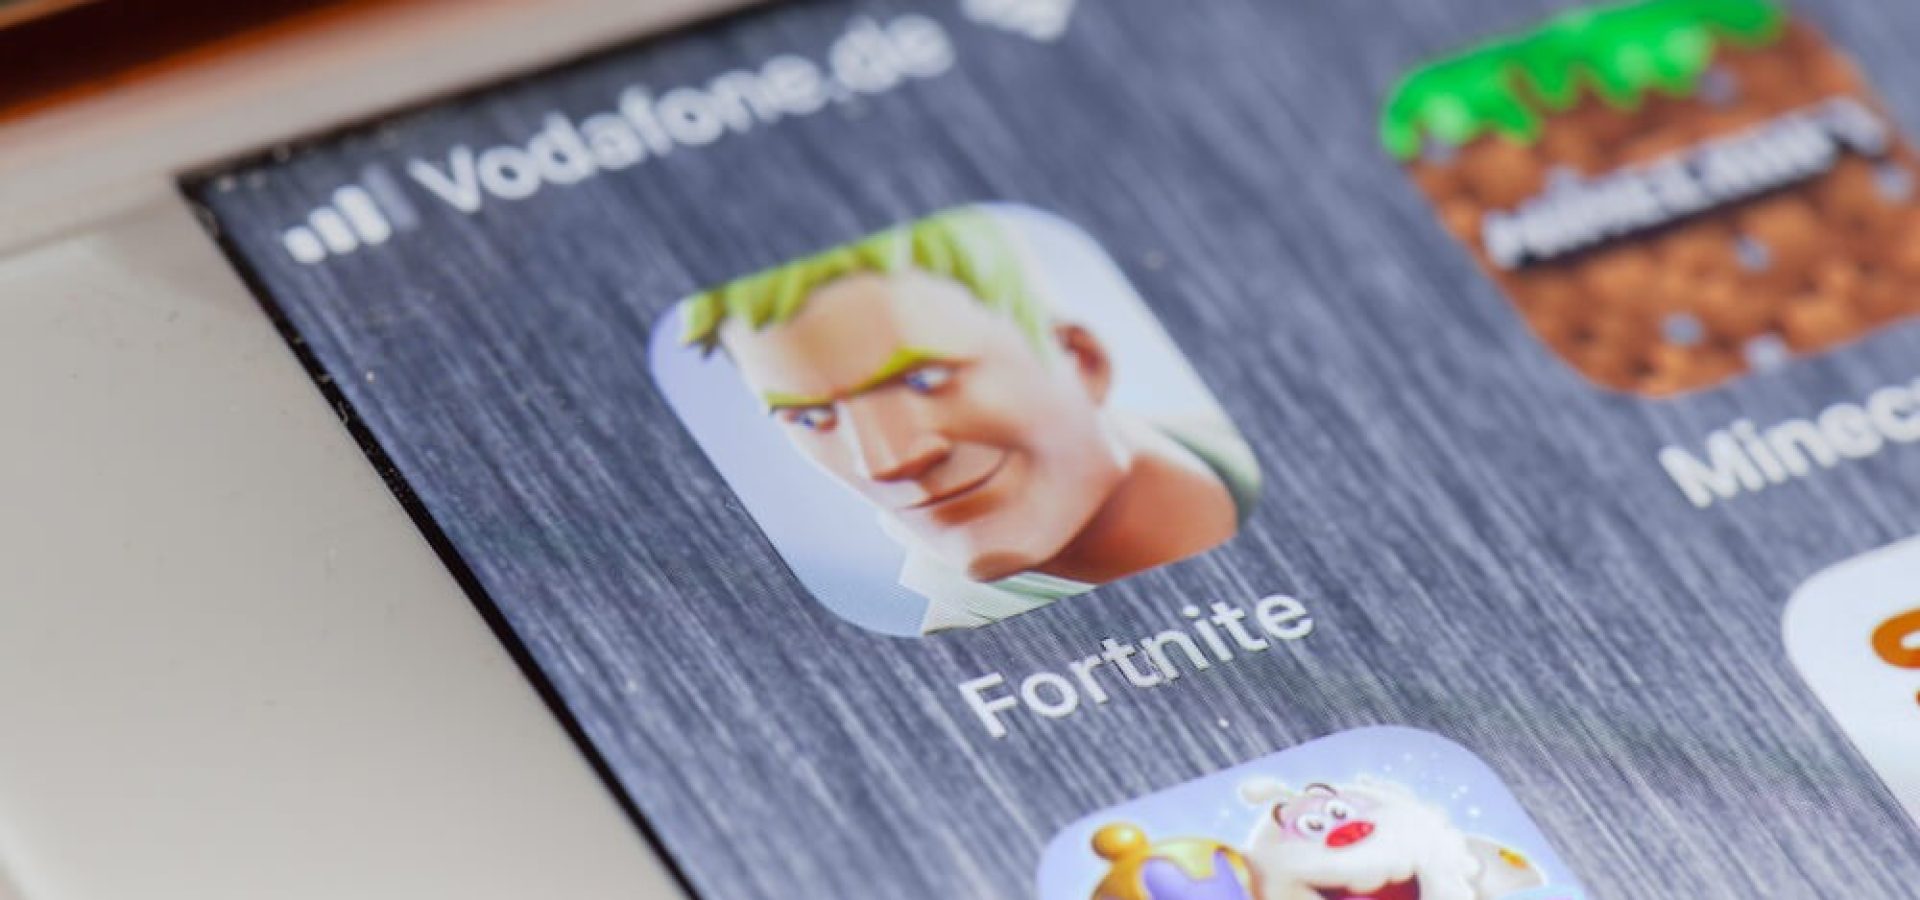 Fortnite game app on screen of smartphone.